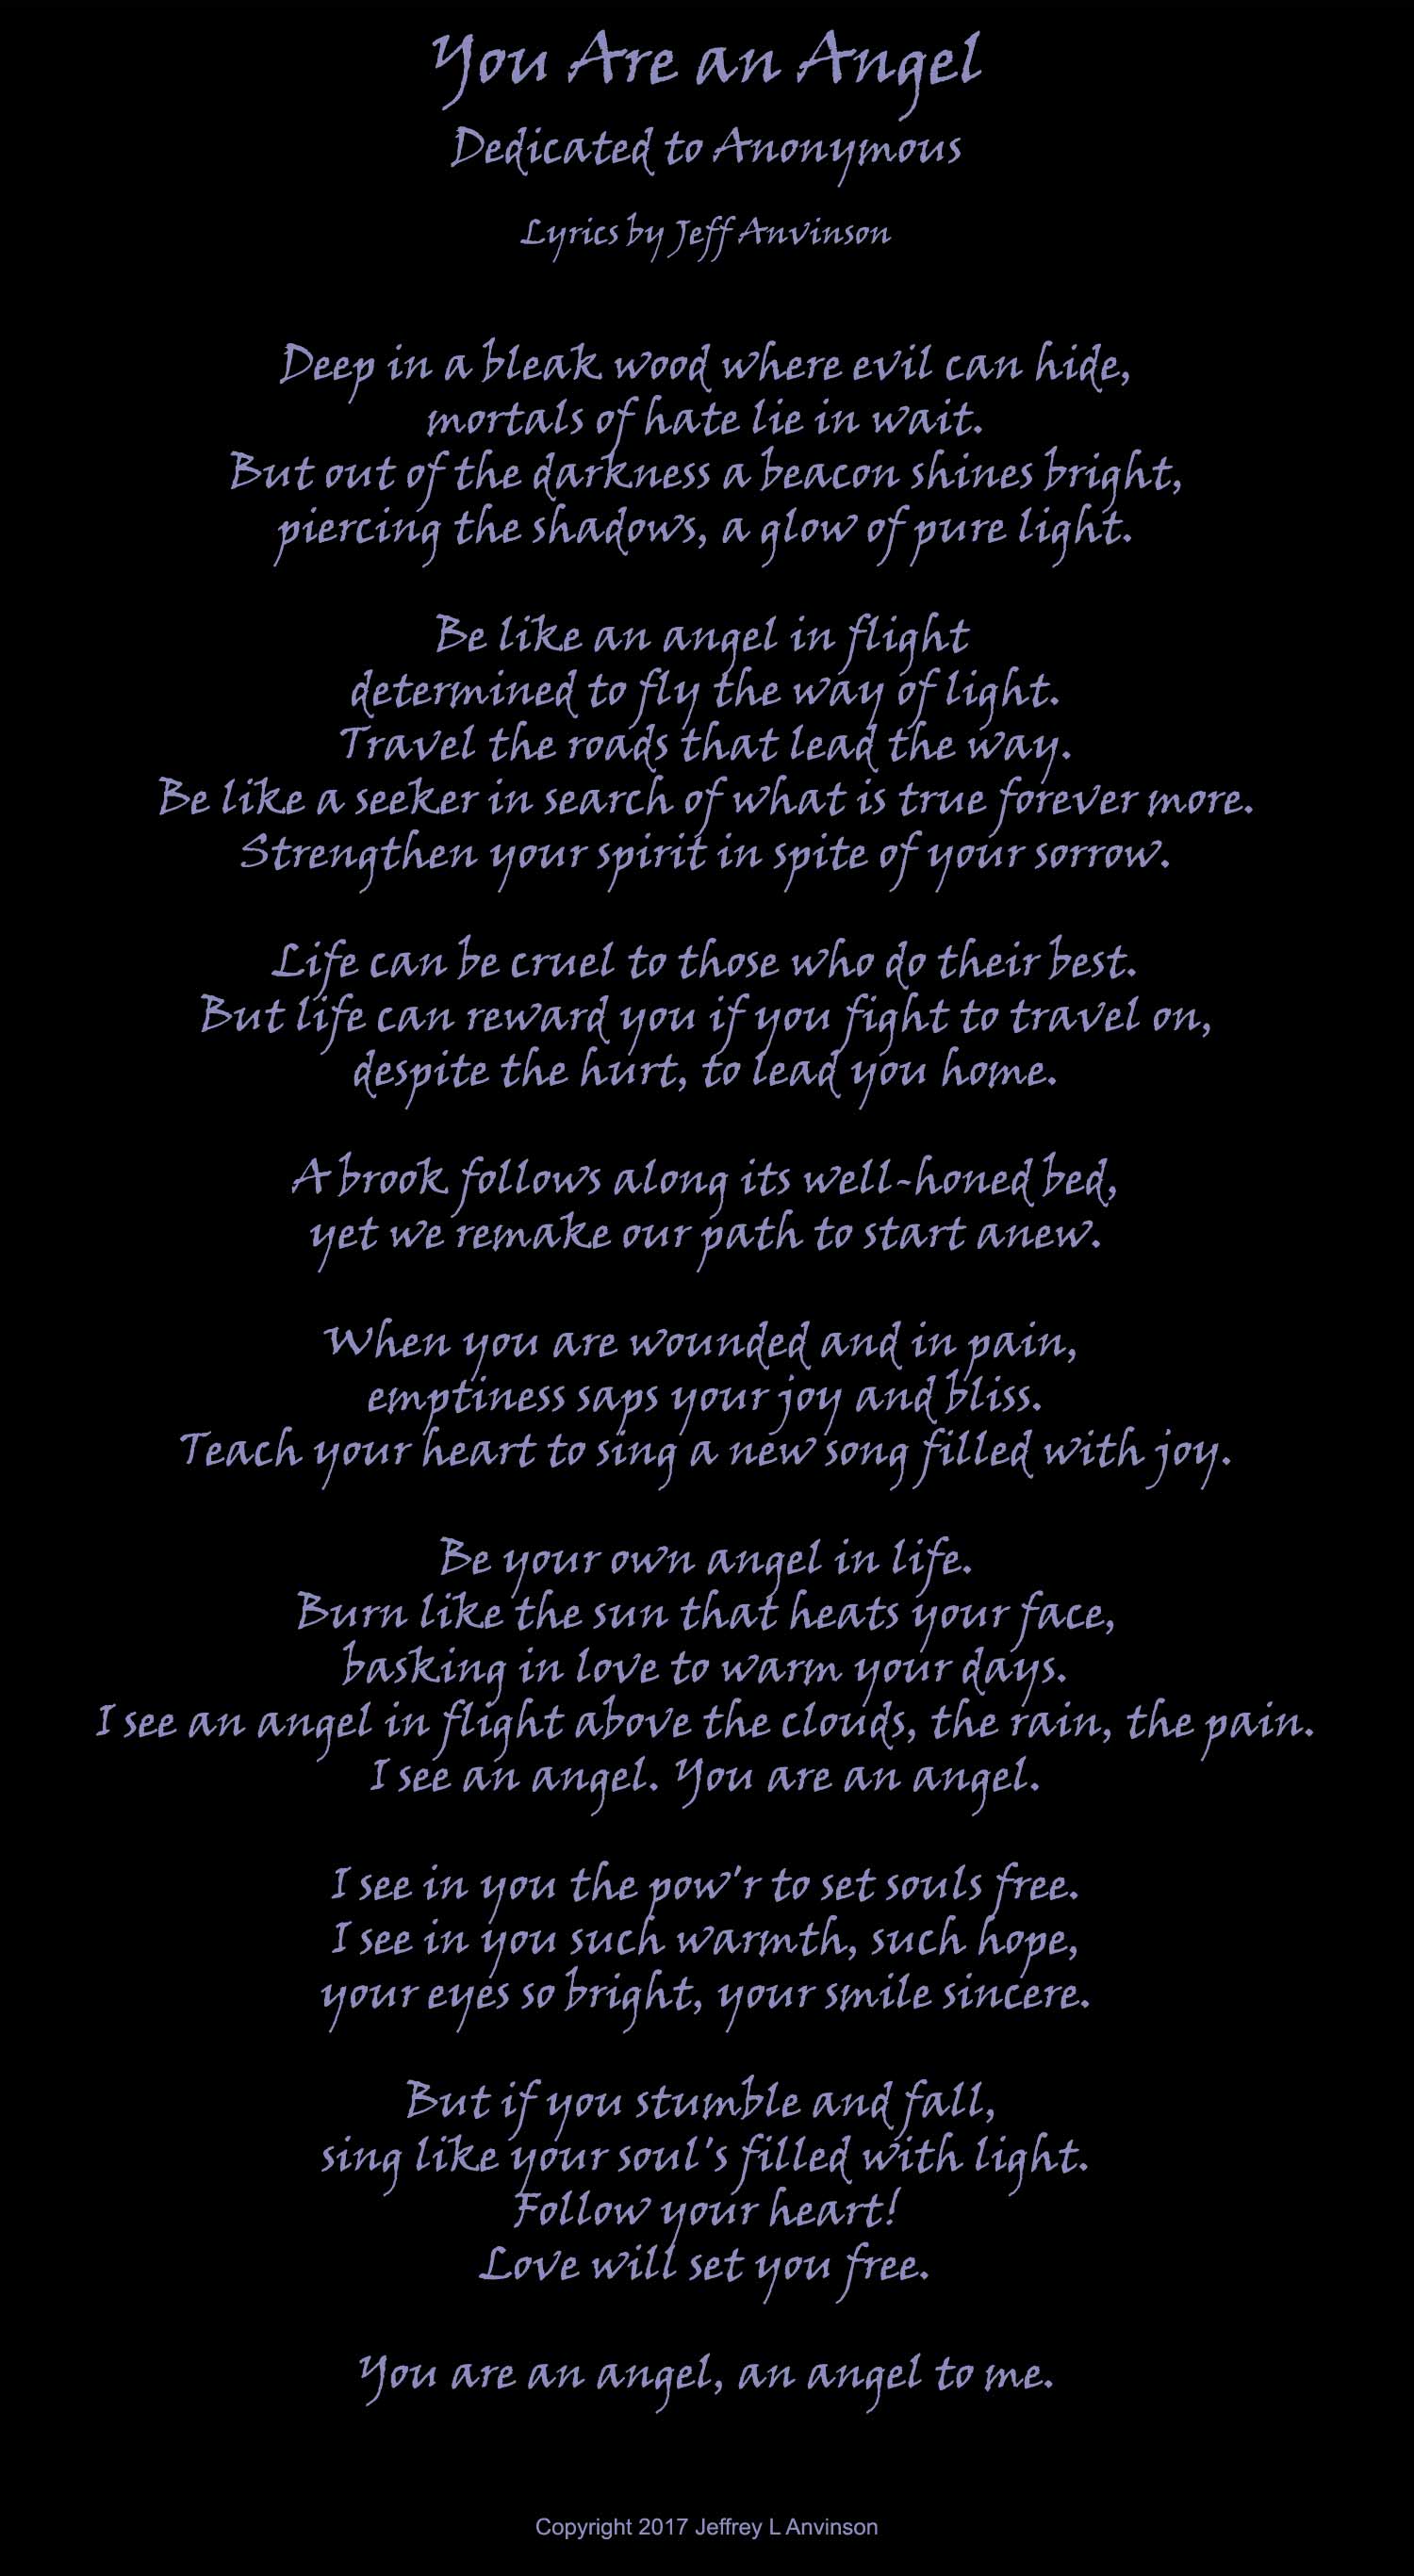 Lyrics to "You Are an Angel